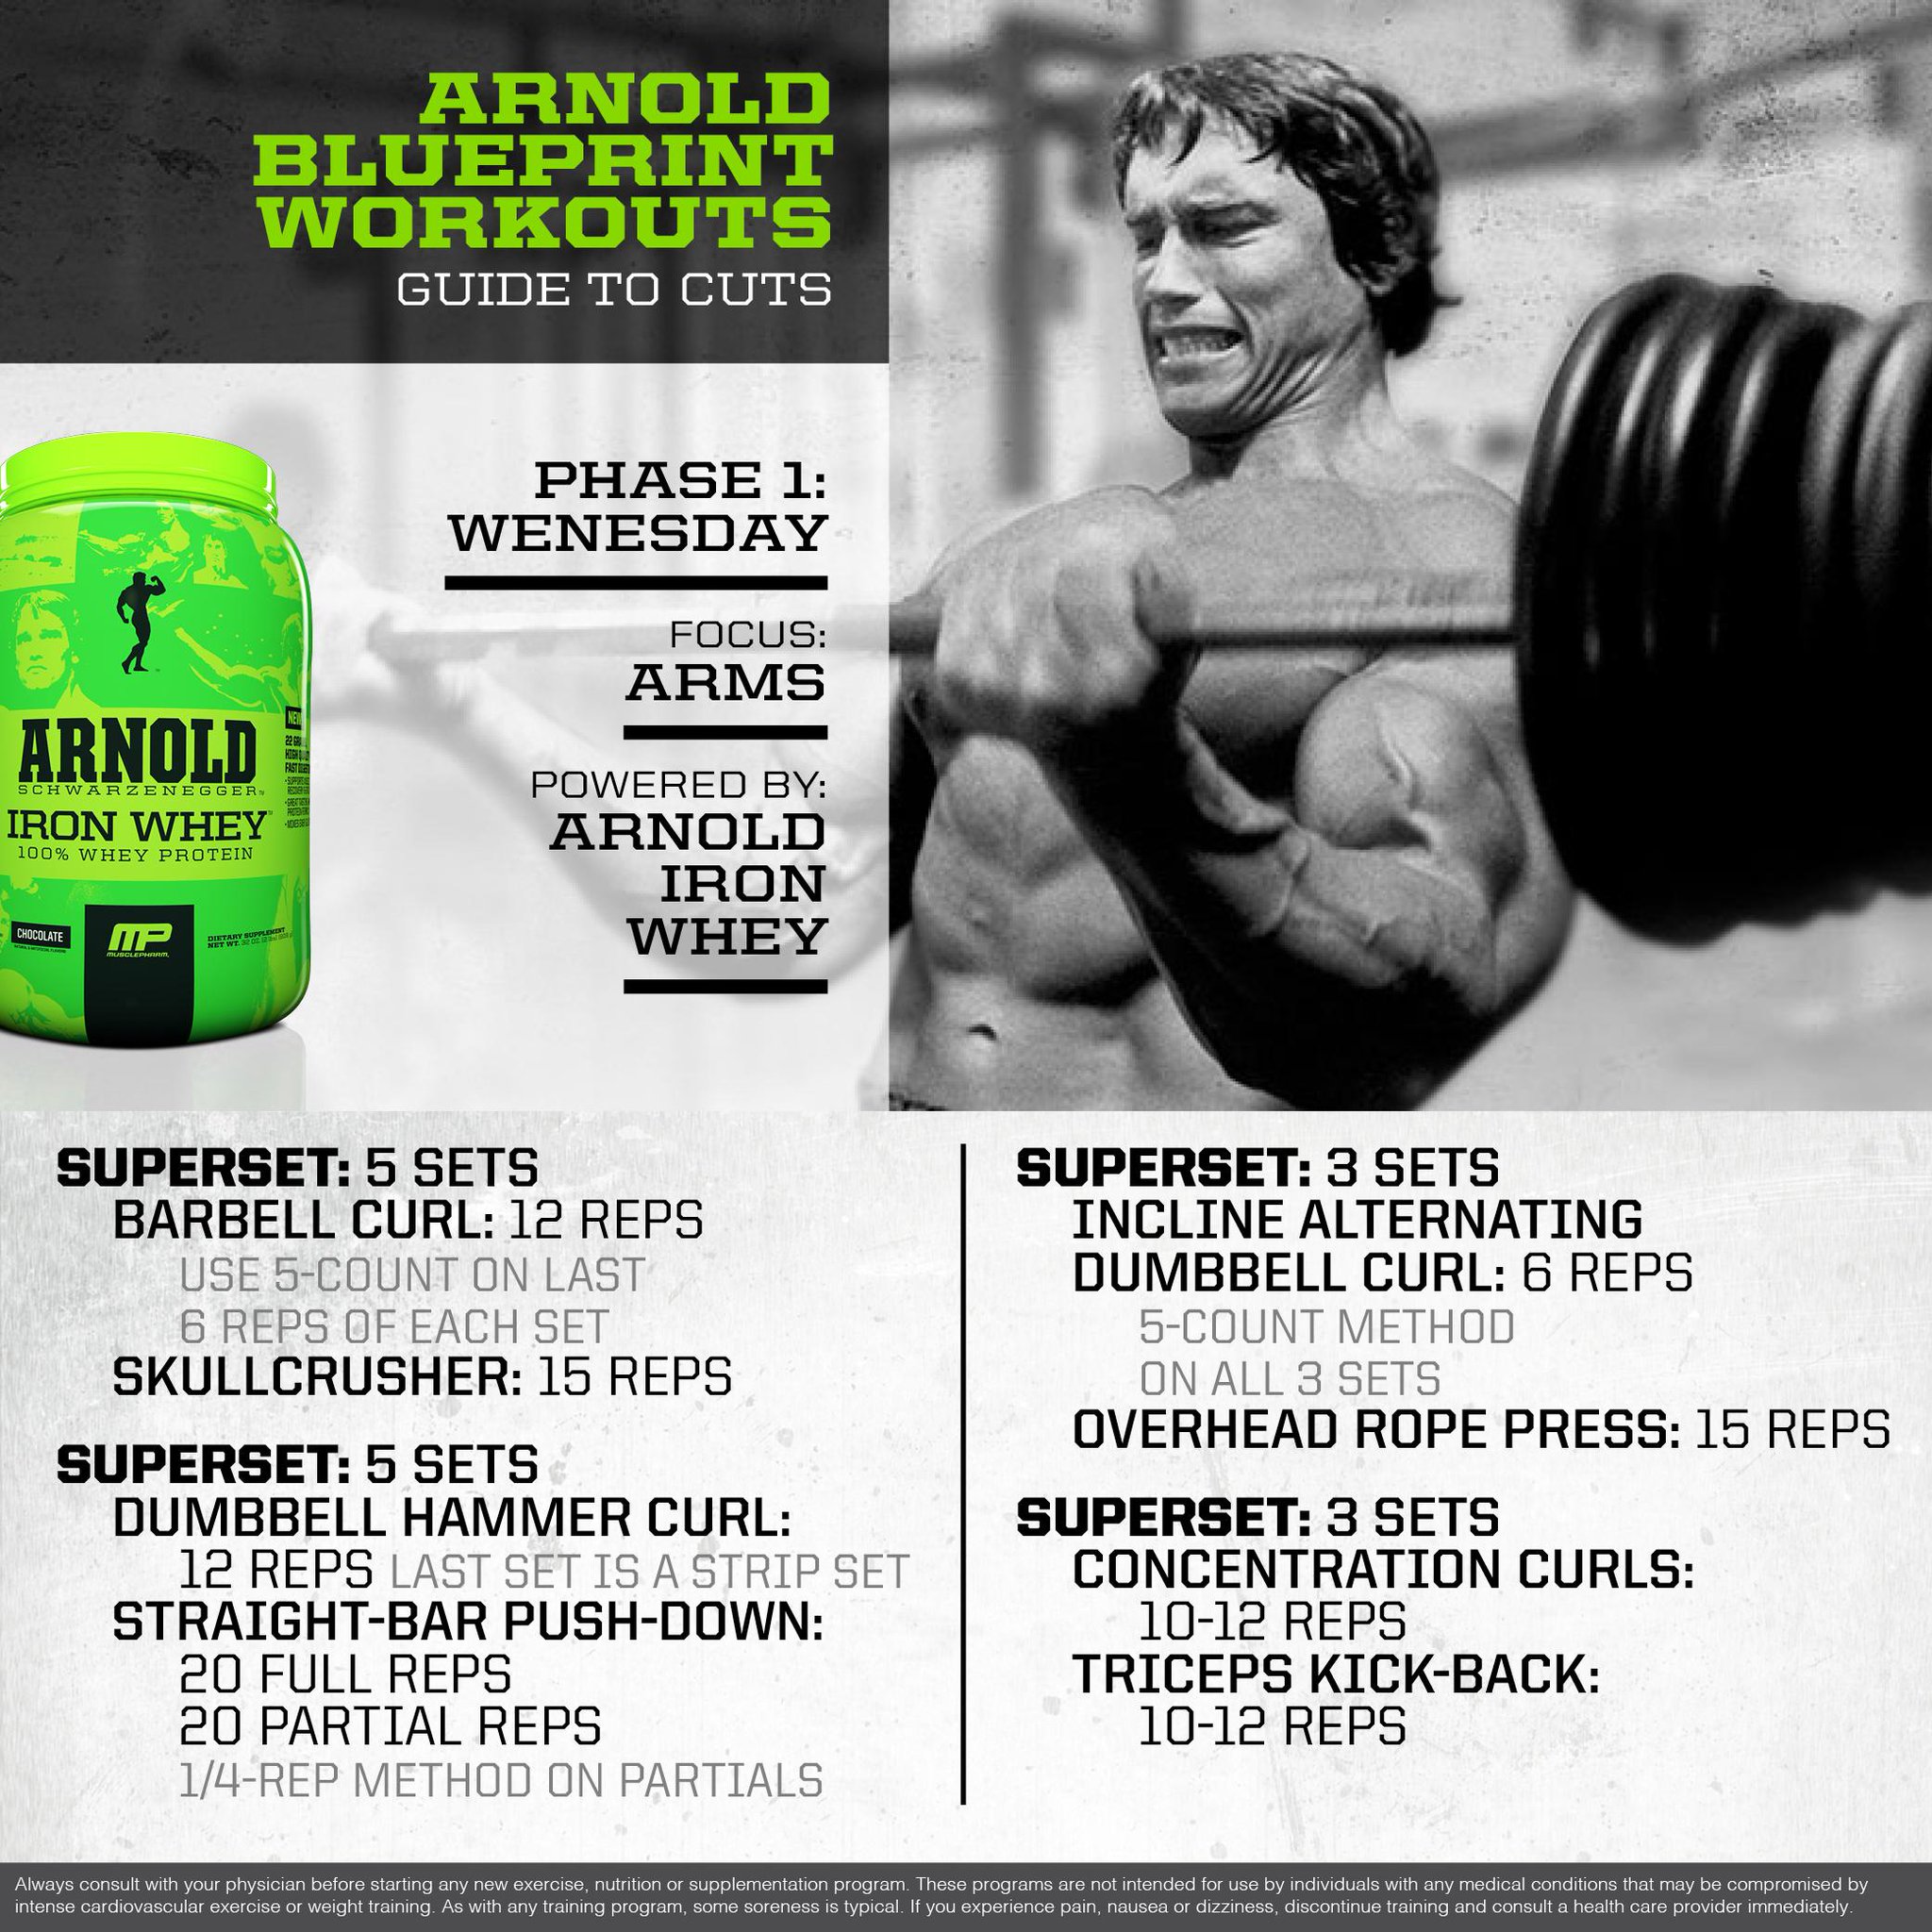 30 Minute Arnold Schwarzenegger Workout Routine for Women